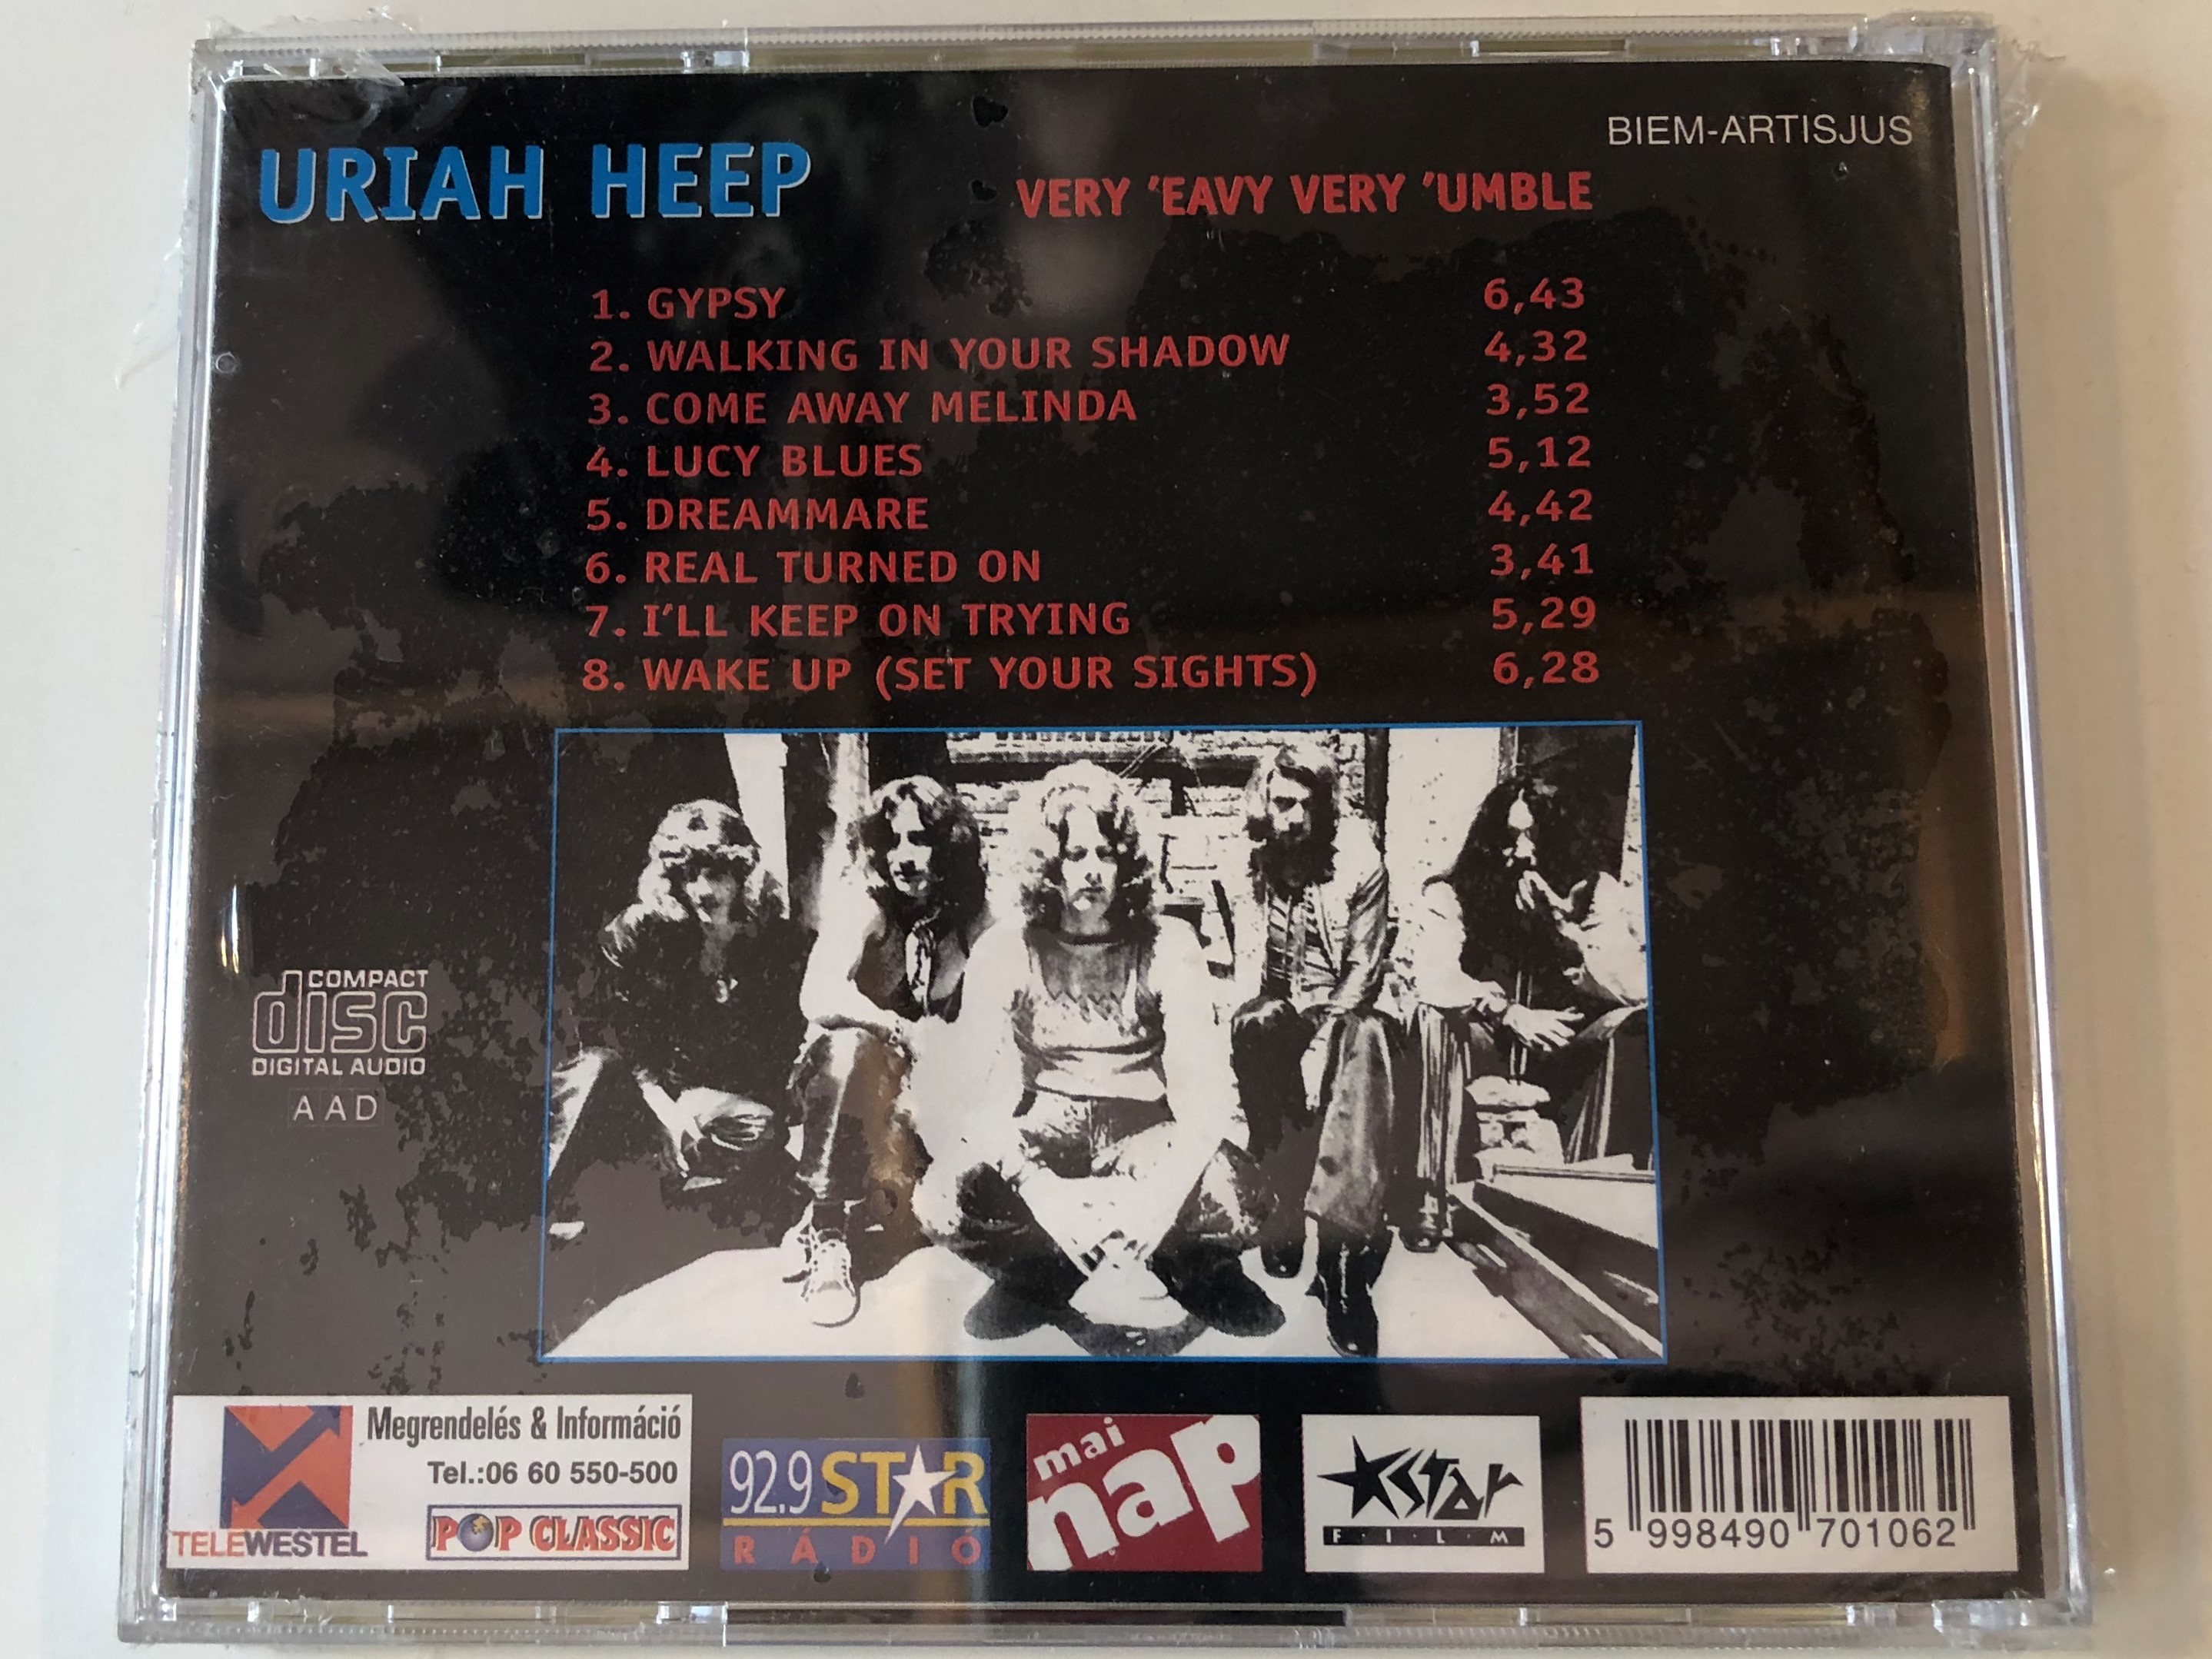 uriah-heep-...very-eavy-pop-classic-euroton-audio-cd-5998490701062-2-.jpg